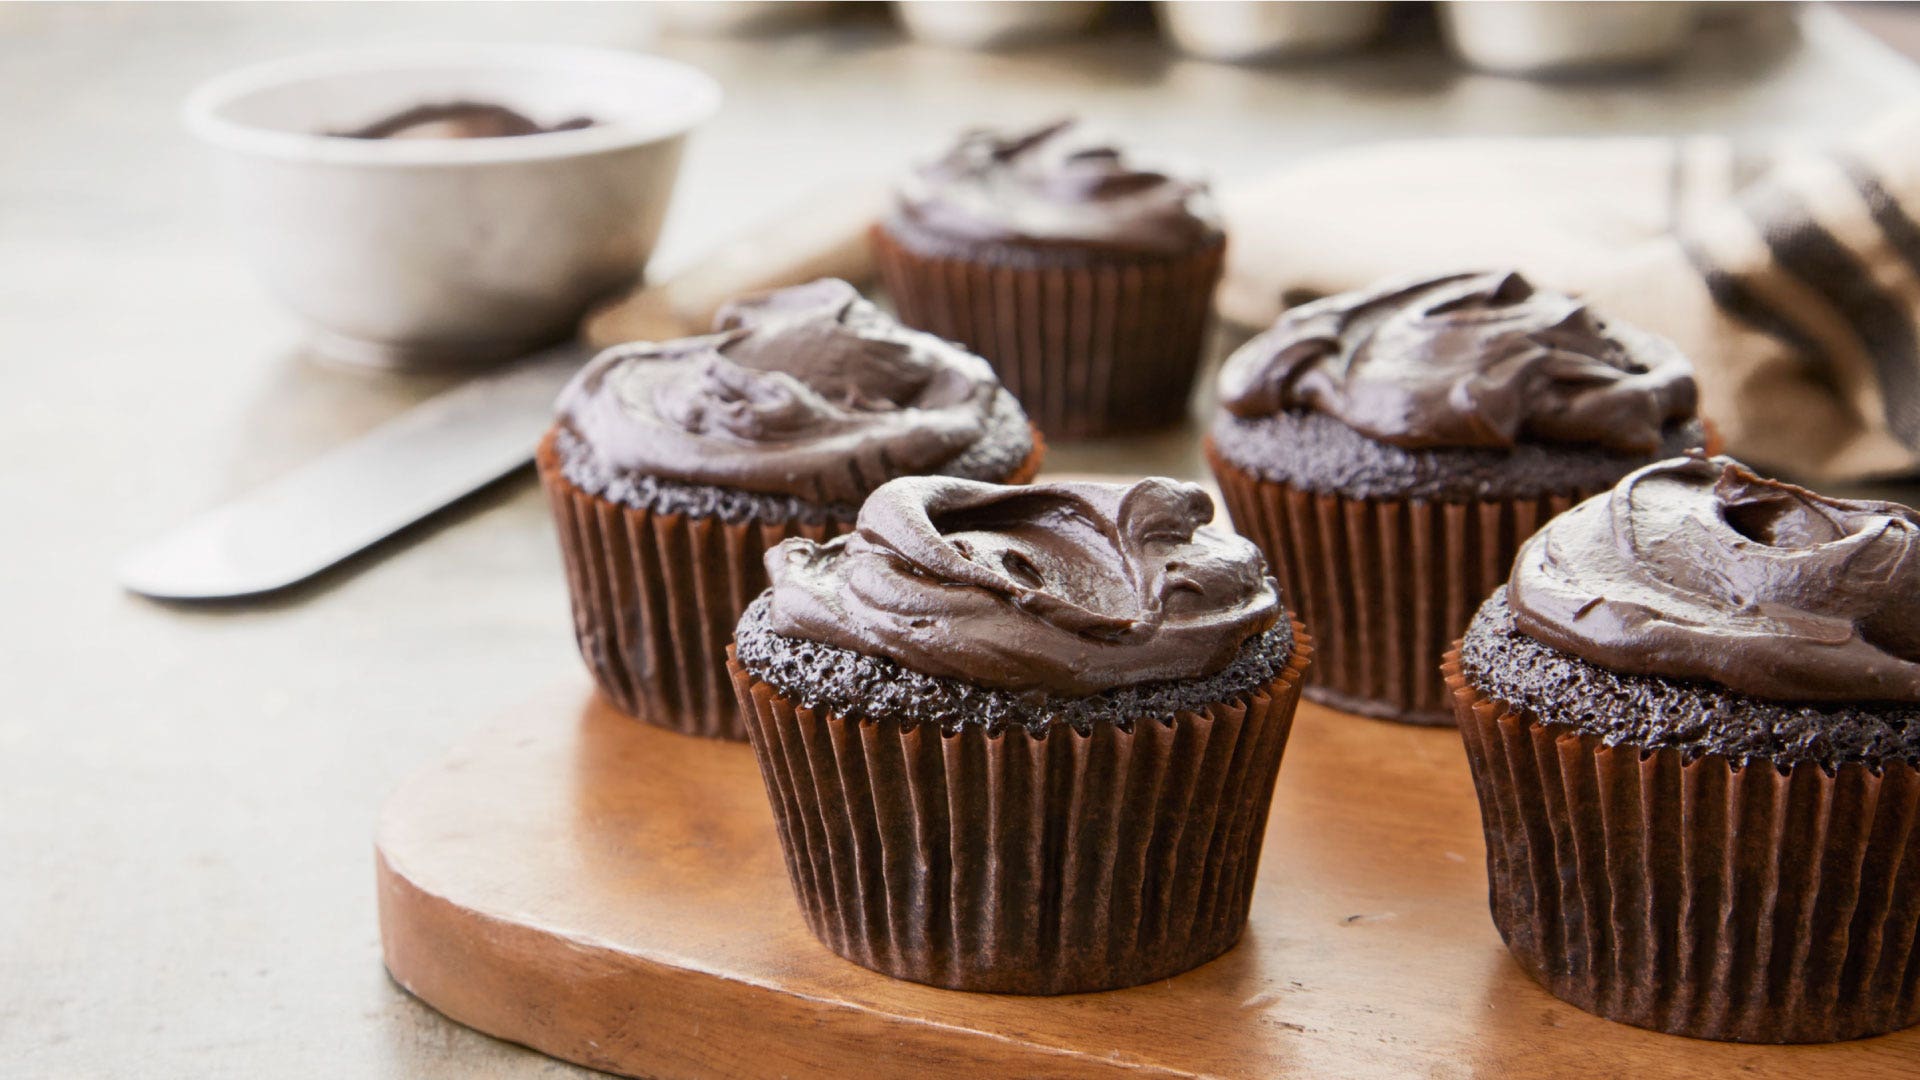 HERSHEY’S “Especially Dark” Chocolate Cupcakes